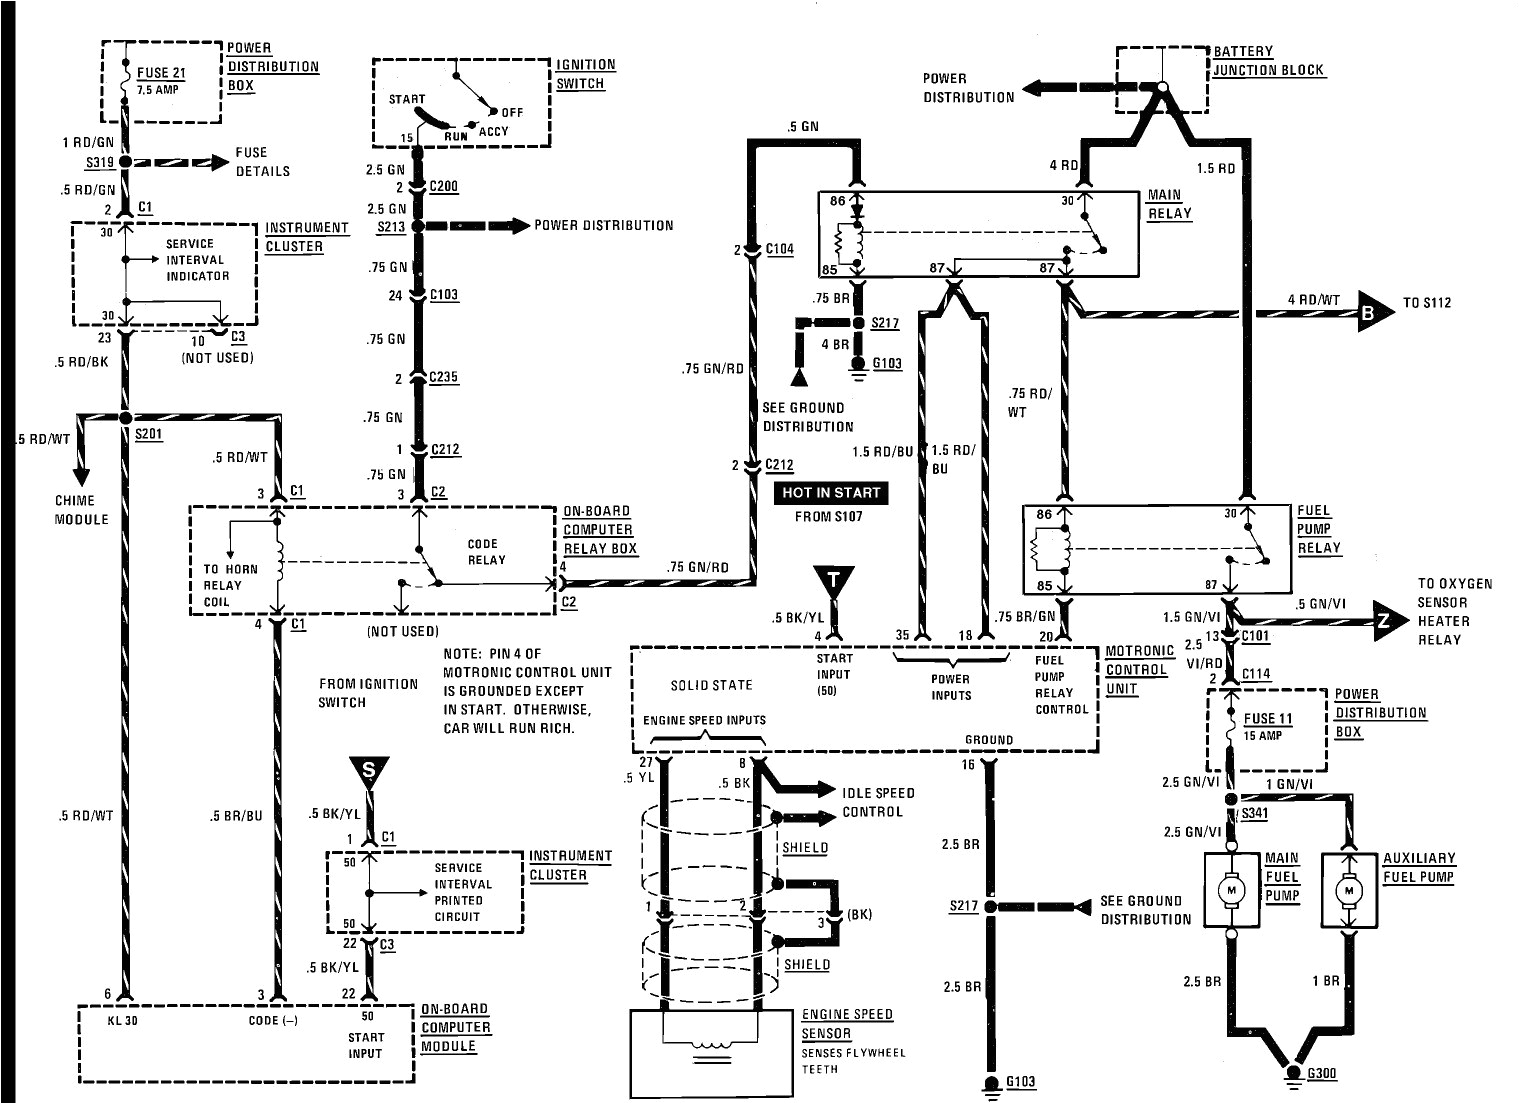 bmw fuel pump wiring diagram premium wiring diagram blog wiring diagram bmw e30 fuel pump relay location 2003 bmw 325i wiring